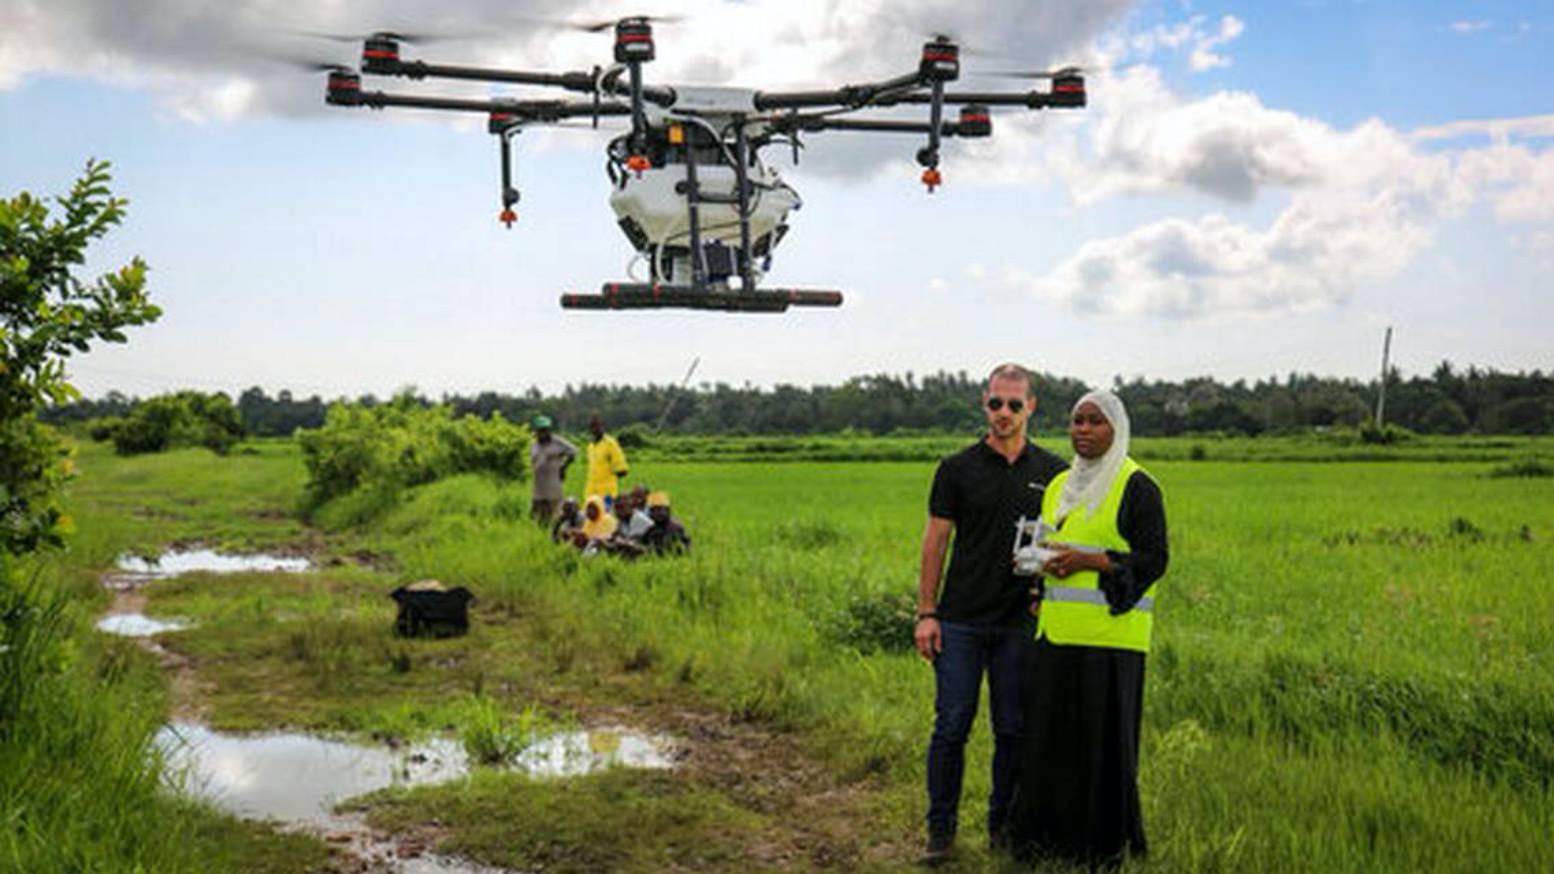 DJI Argas drone fights malaria in Zanzibar